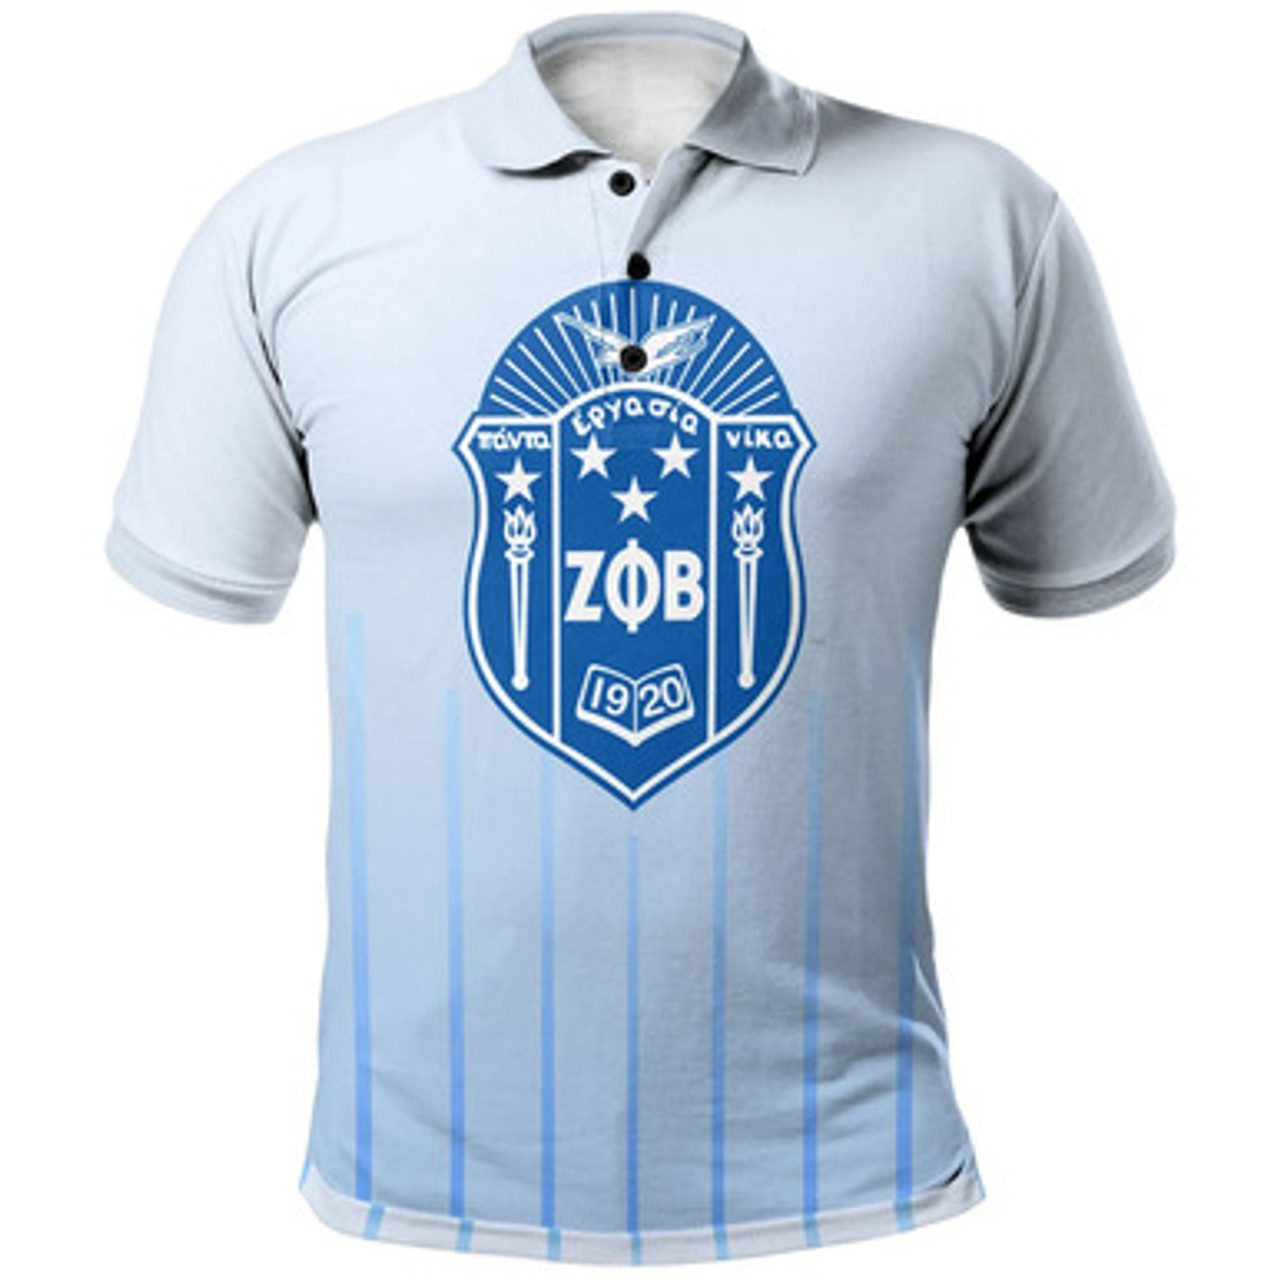 Zeta Phi Beta Polo Shirt – Sorority Polo Shirt